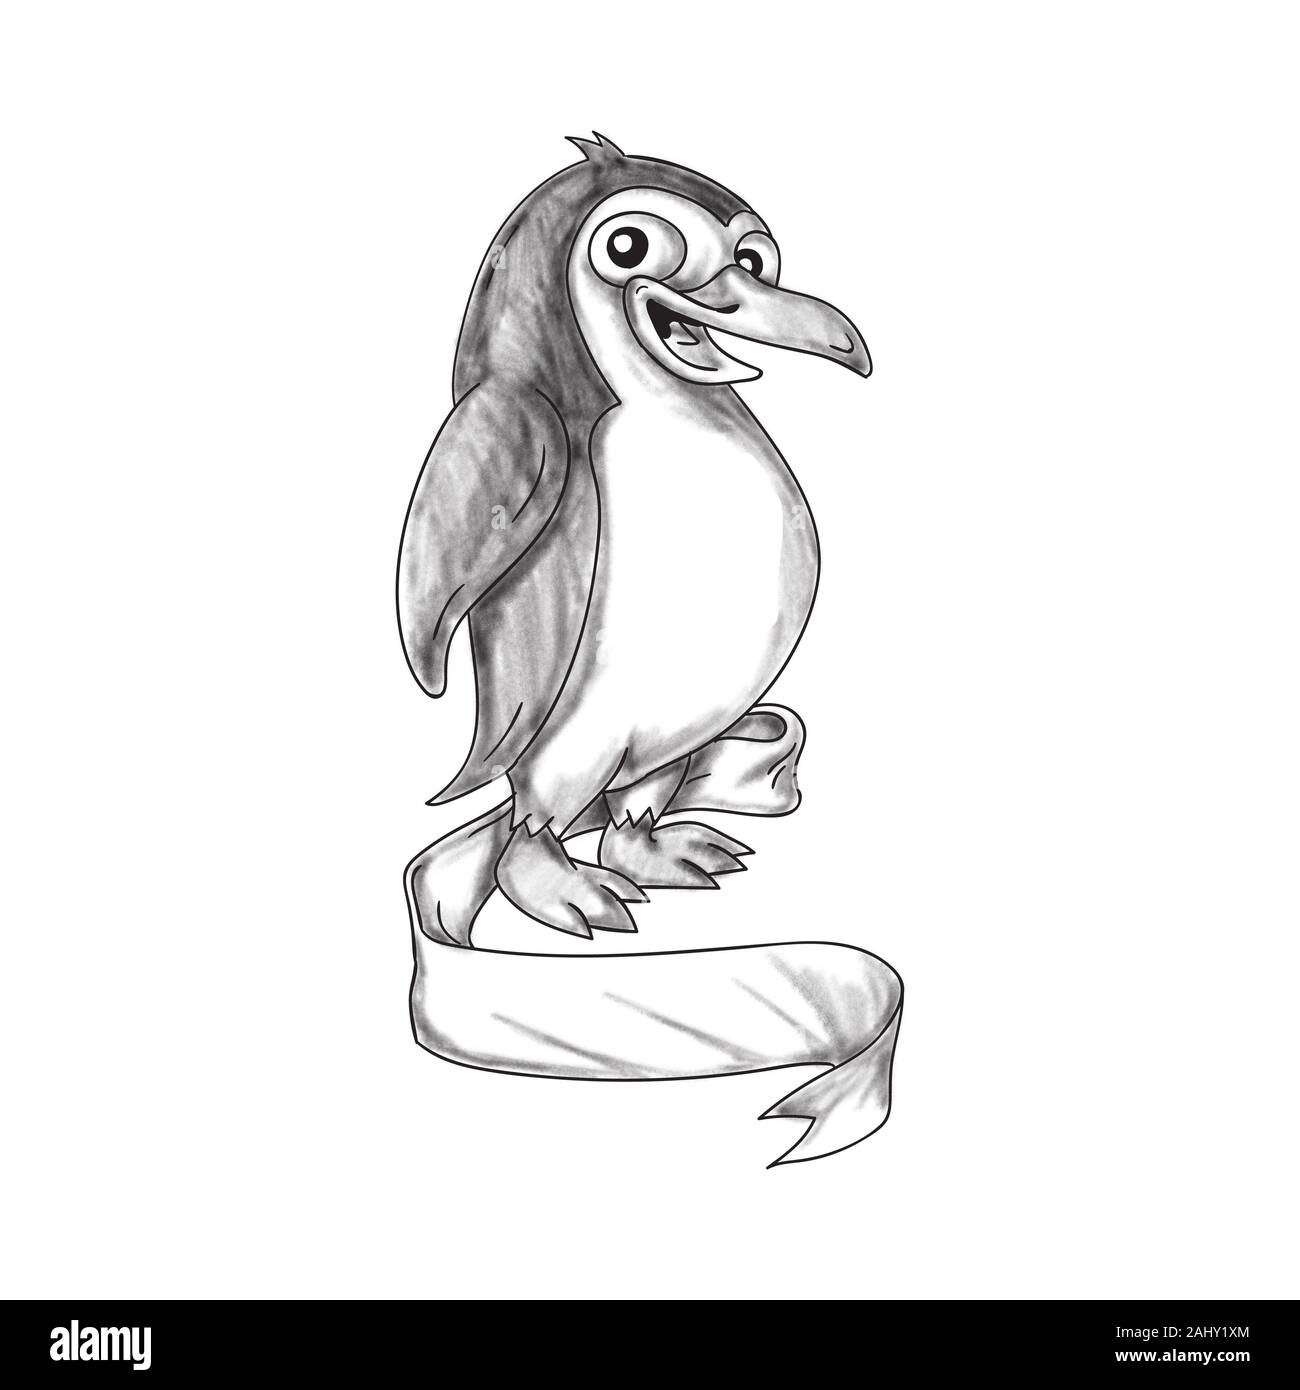 Tattoo bird hi-res stock photography and images - Alamy